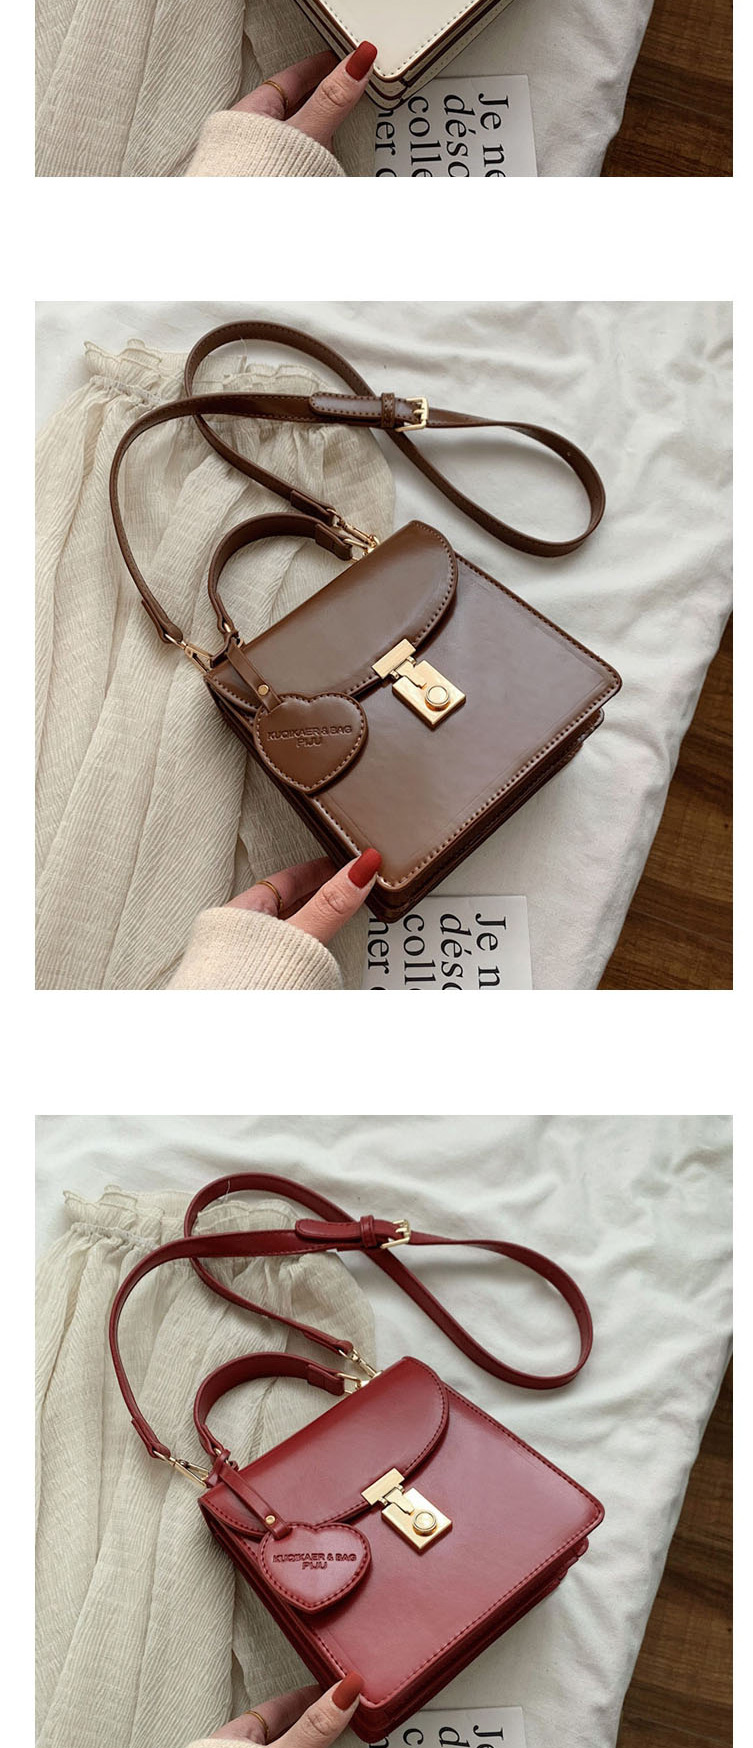 Fashion Red Lock Flap Love Crossbody Shoulder Bag,Handbags